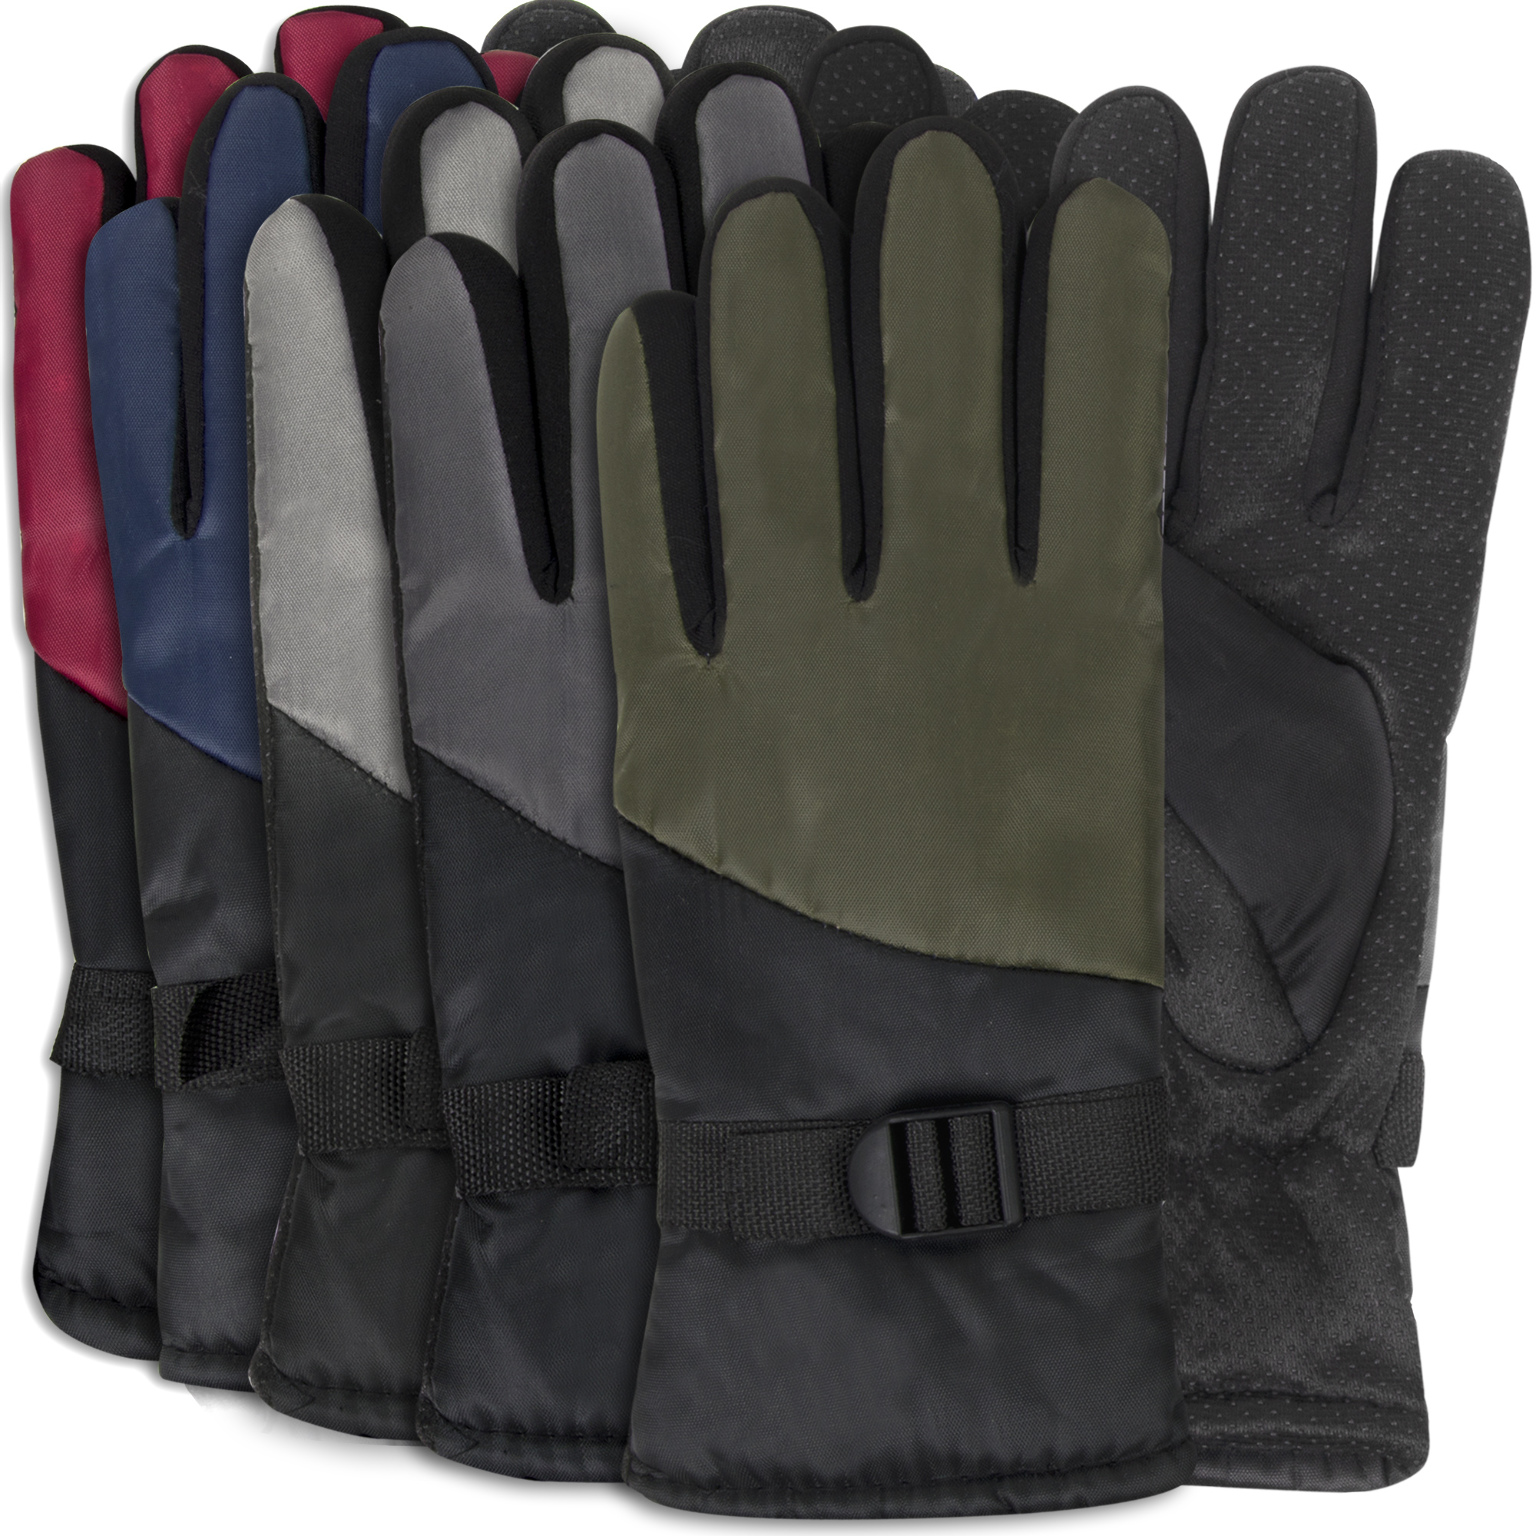 Assorted Ski Gloves